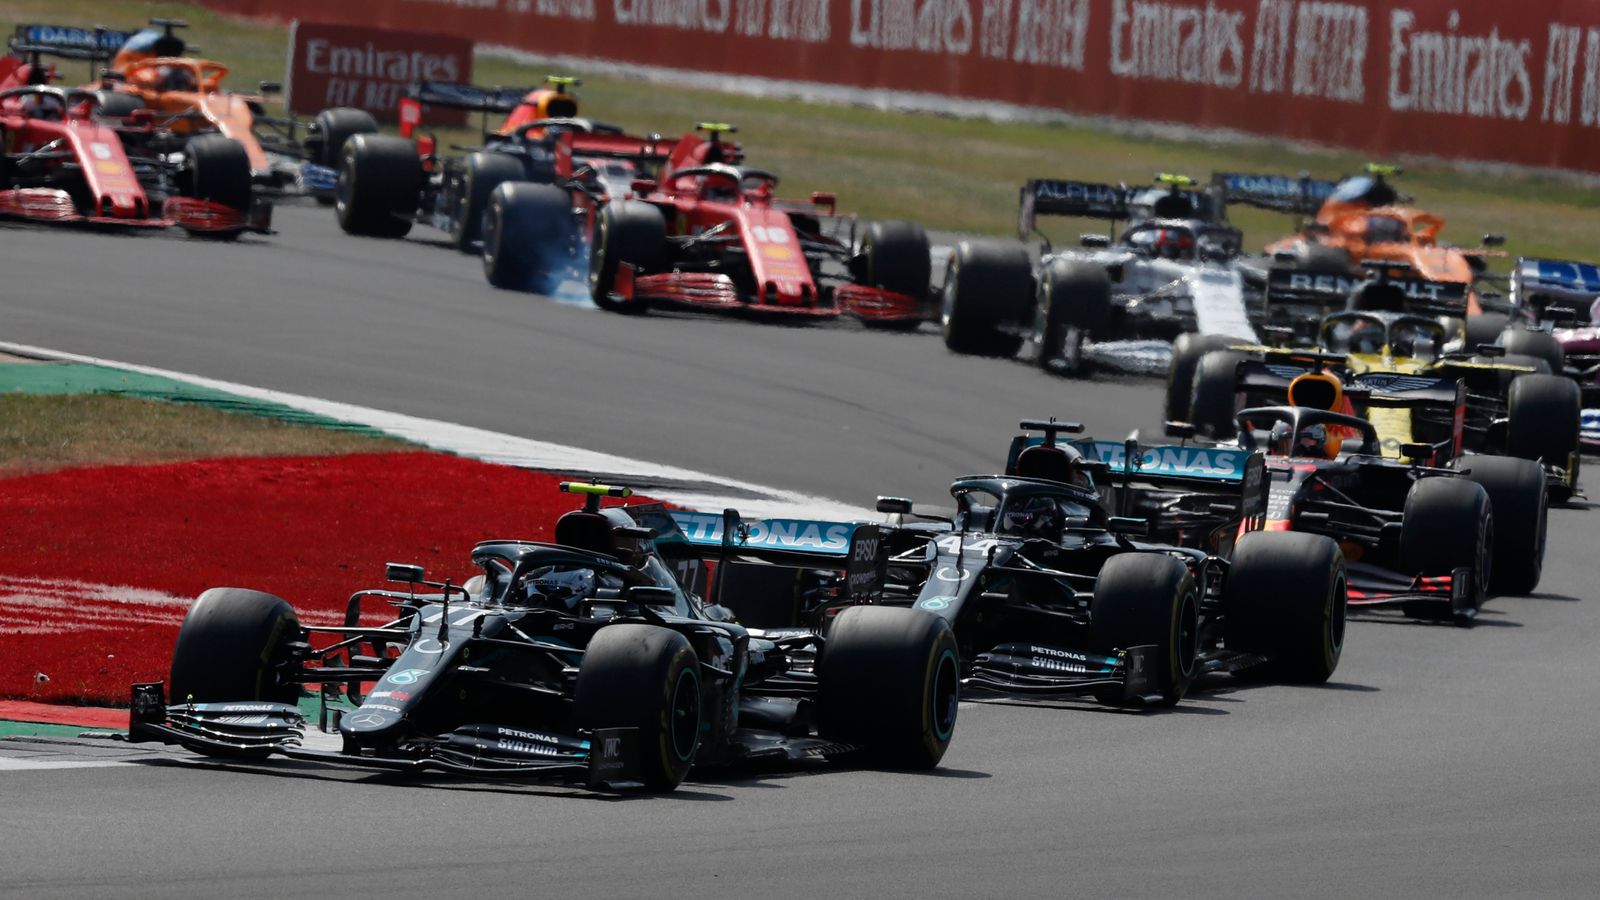 British GP F1 Sprint makes debut as Silverstone hosts new weekend